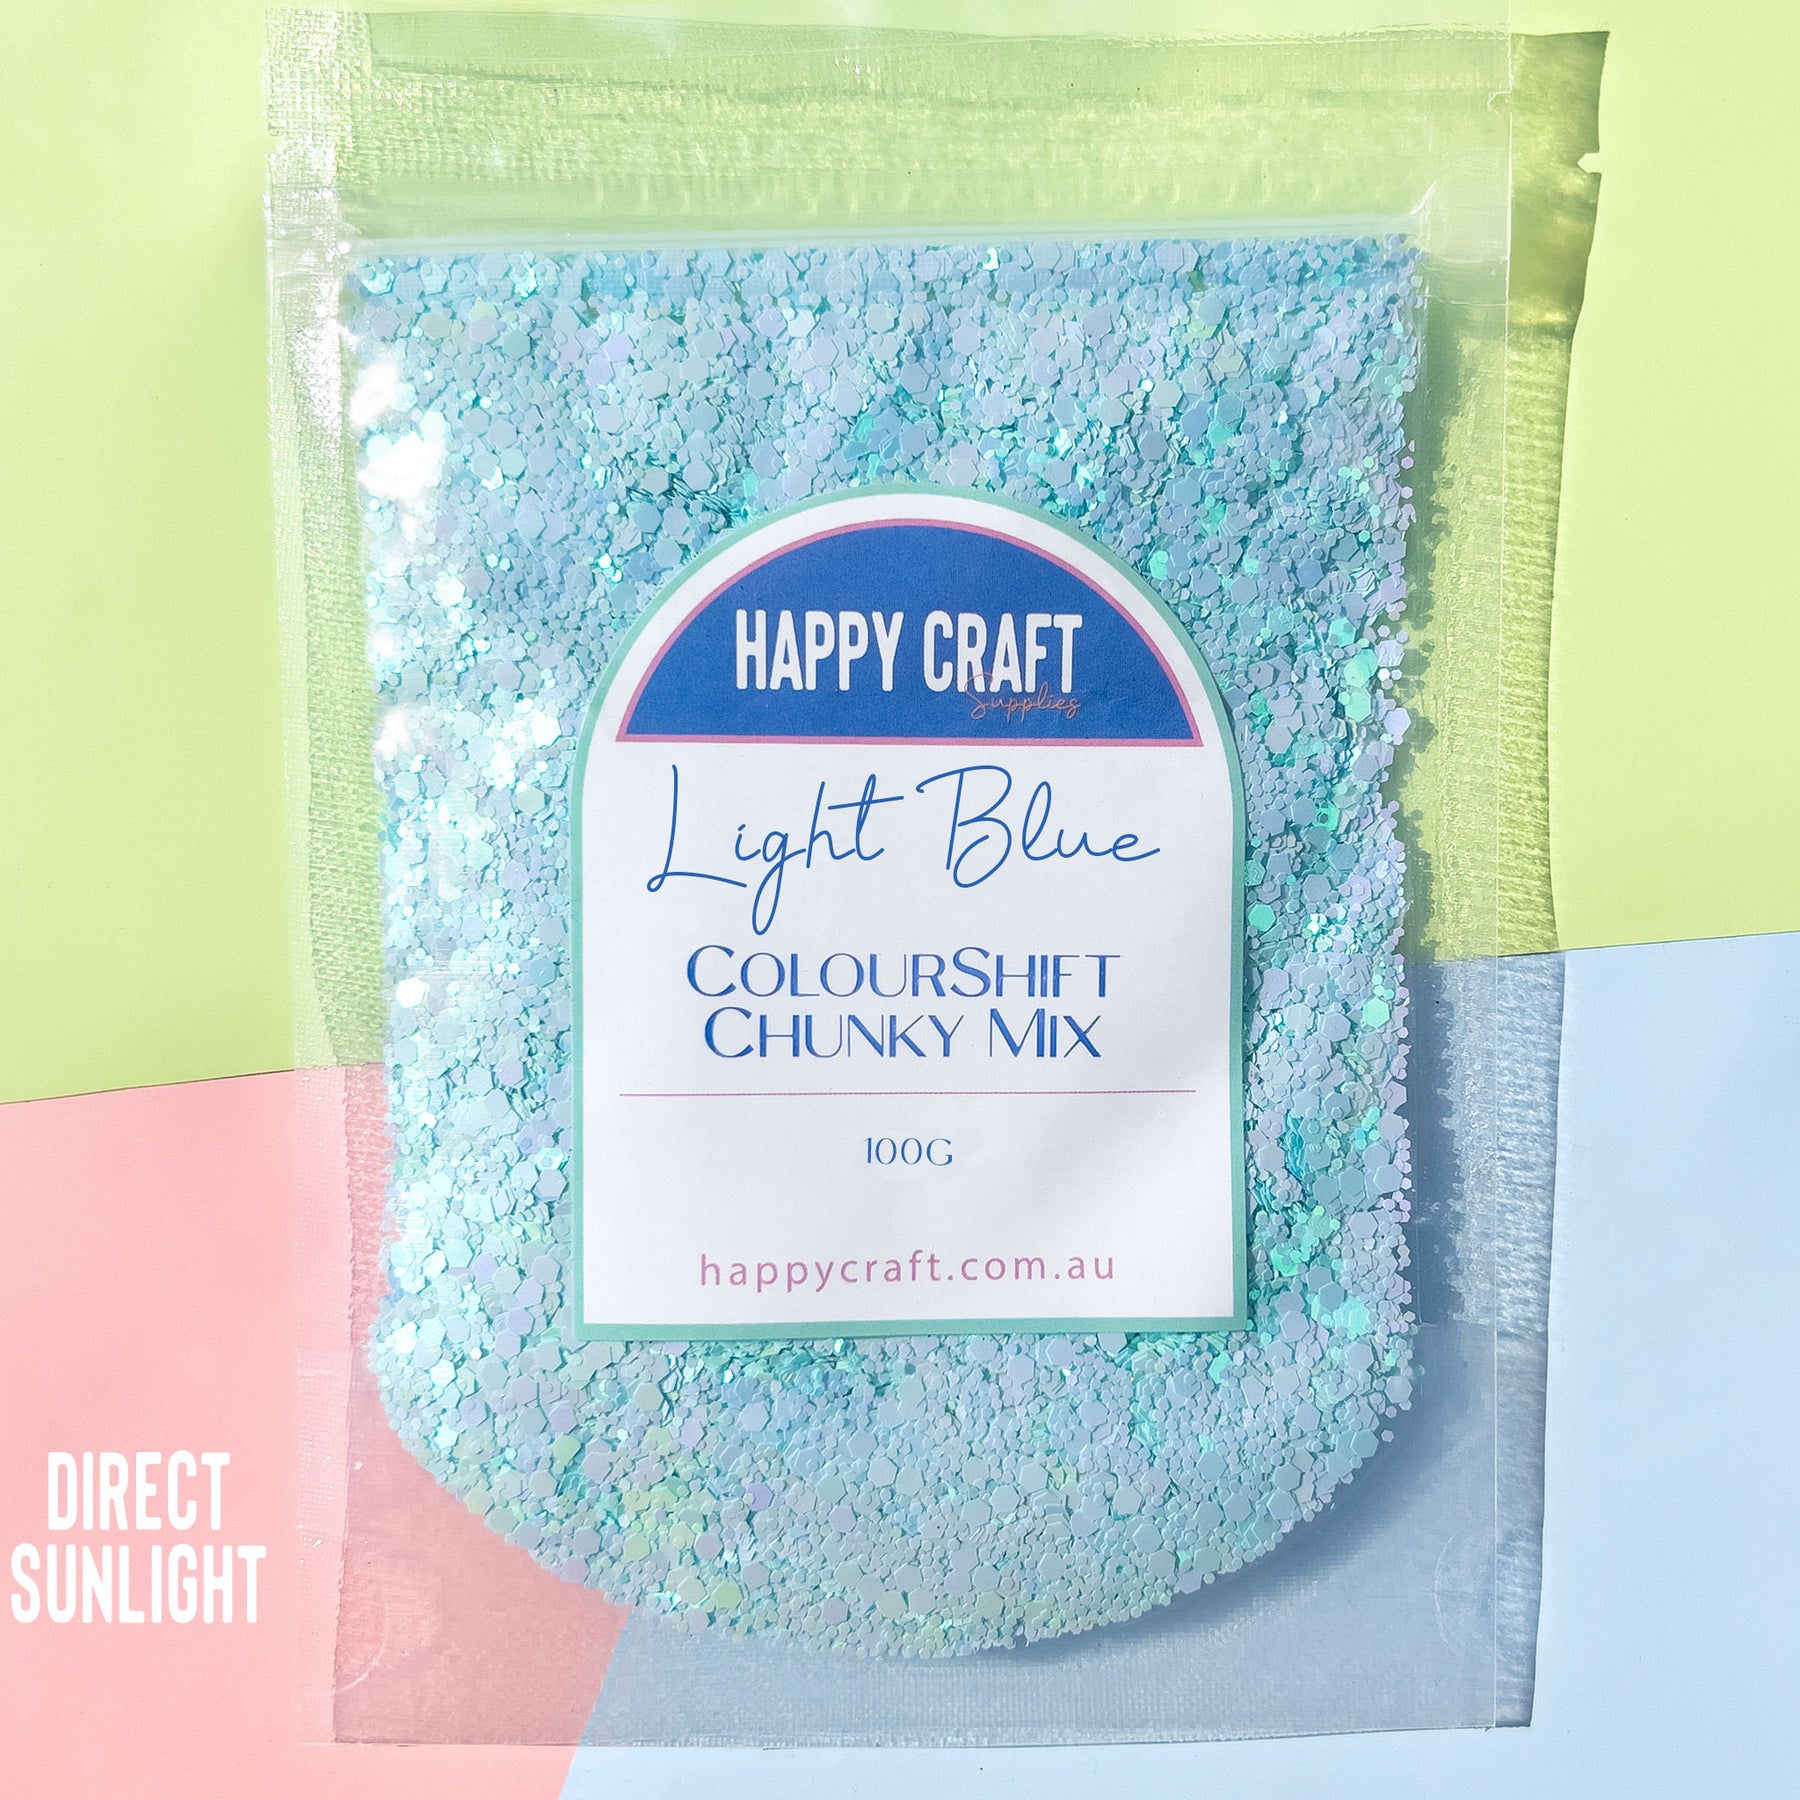 Chunky Glitter Colour Shift Mix - Light Blue